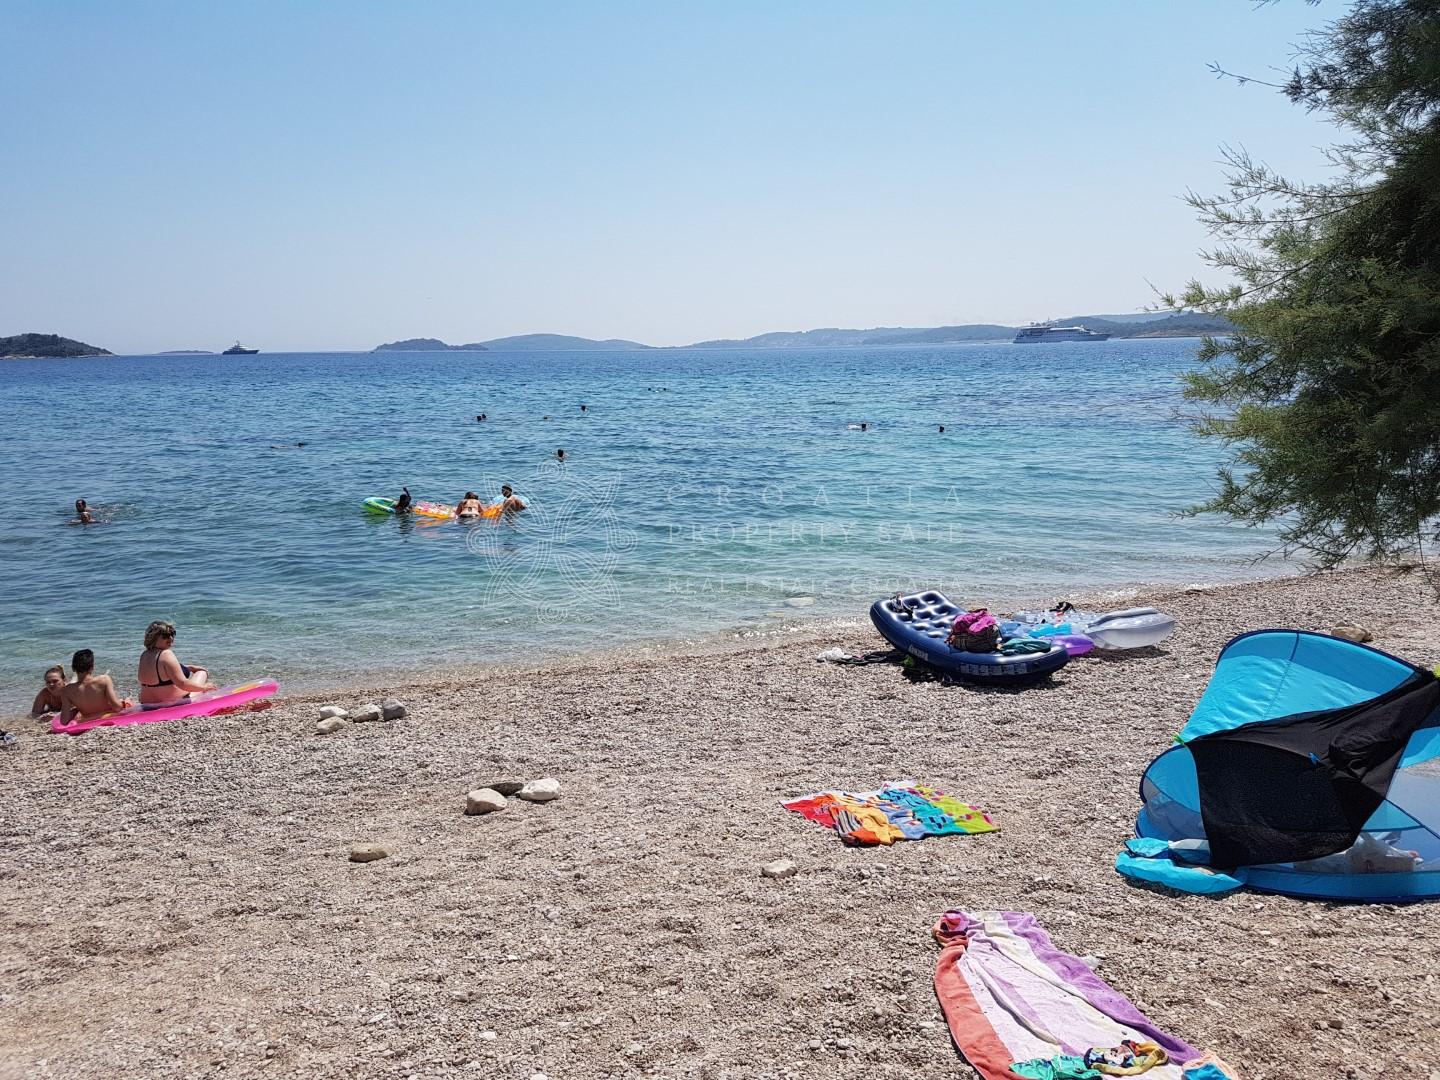 Croatia South Dalmatia Orebic sea view land for sale